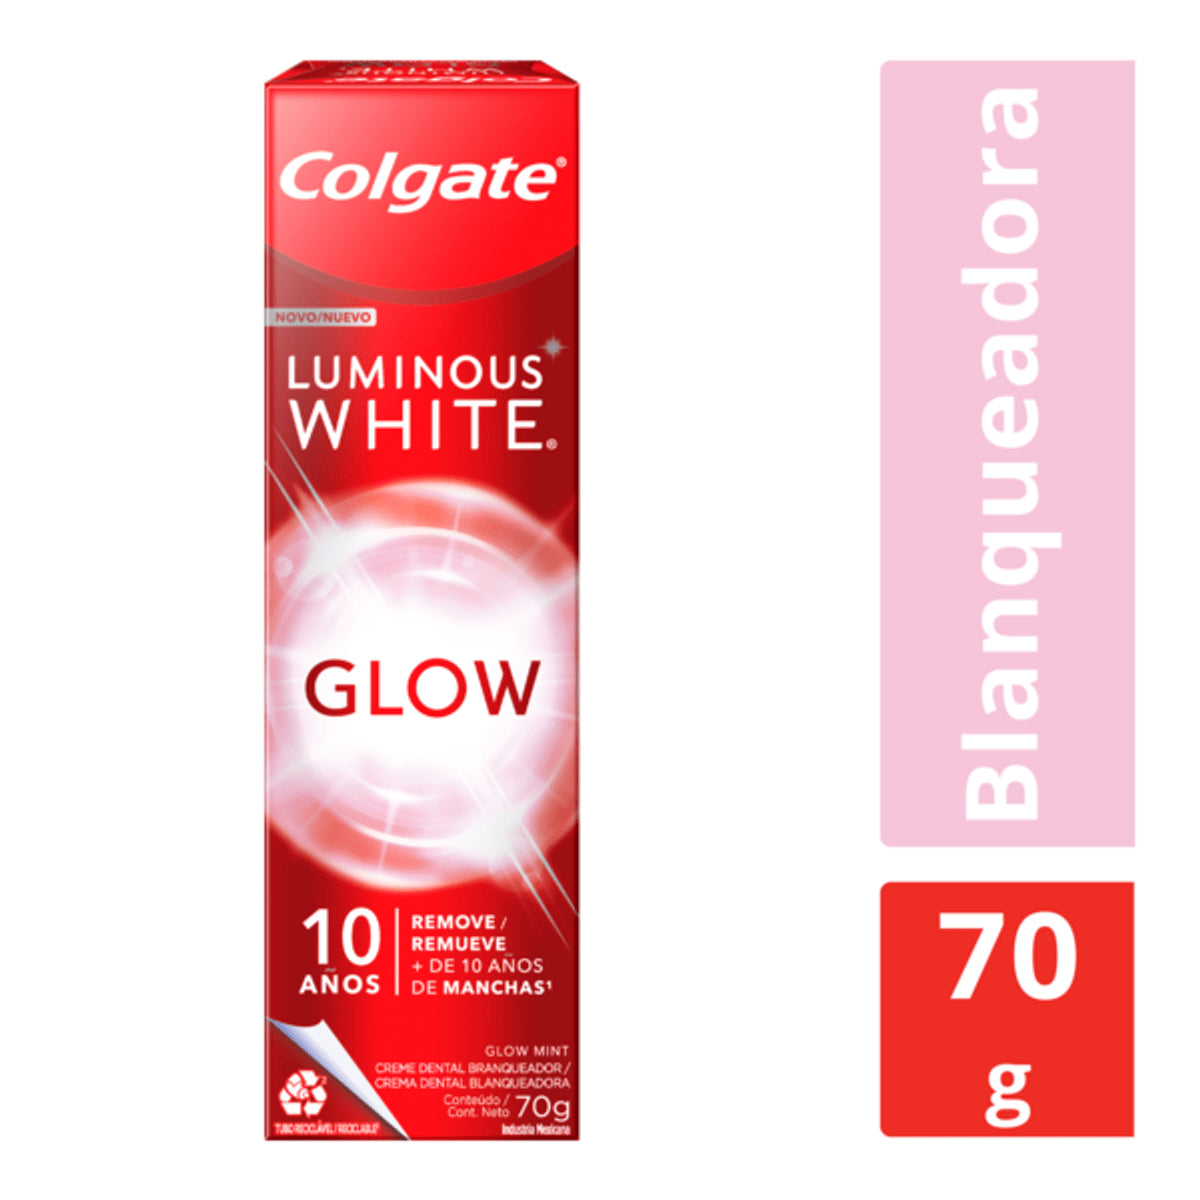 Colgate luminous white glow pasta dental